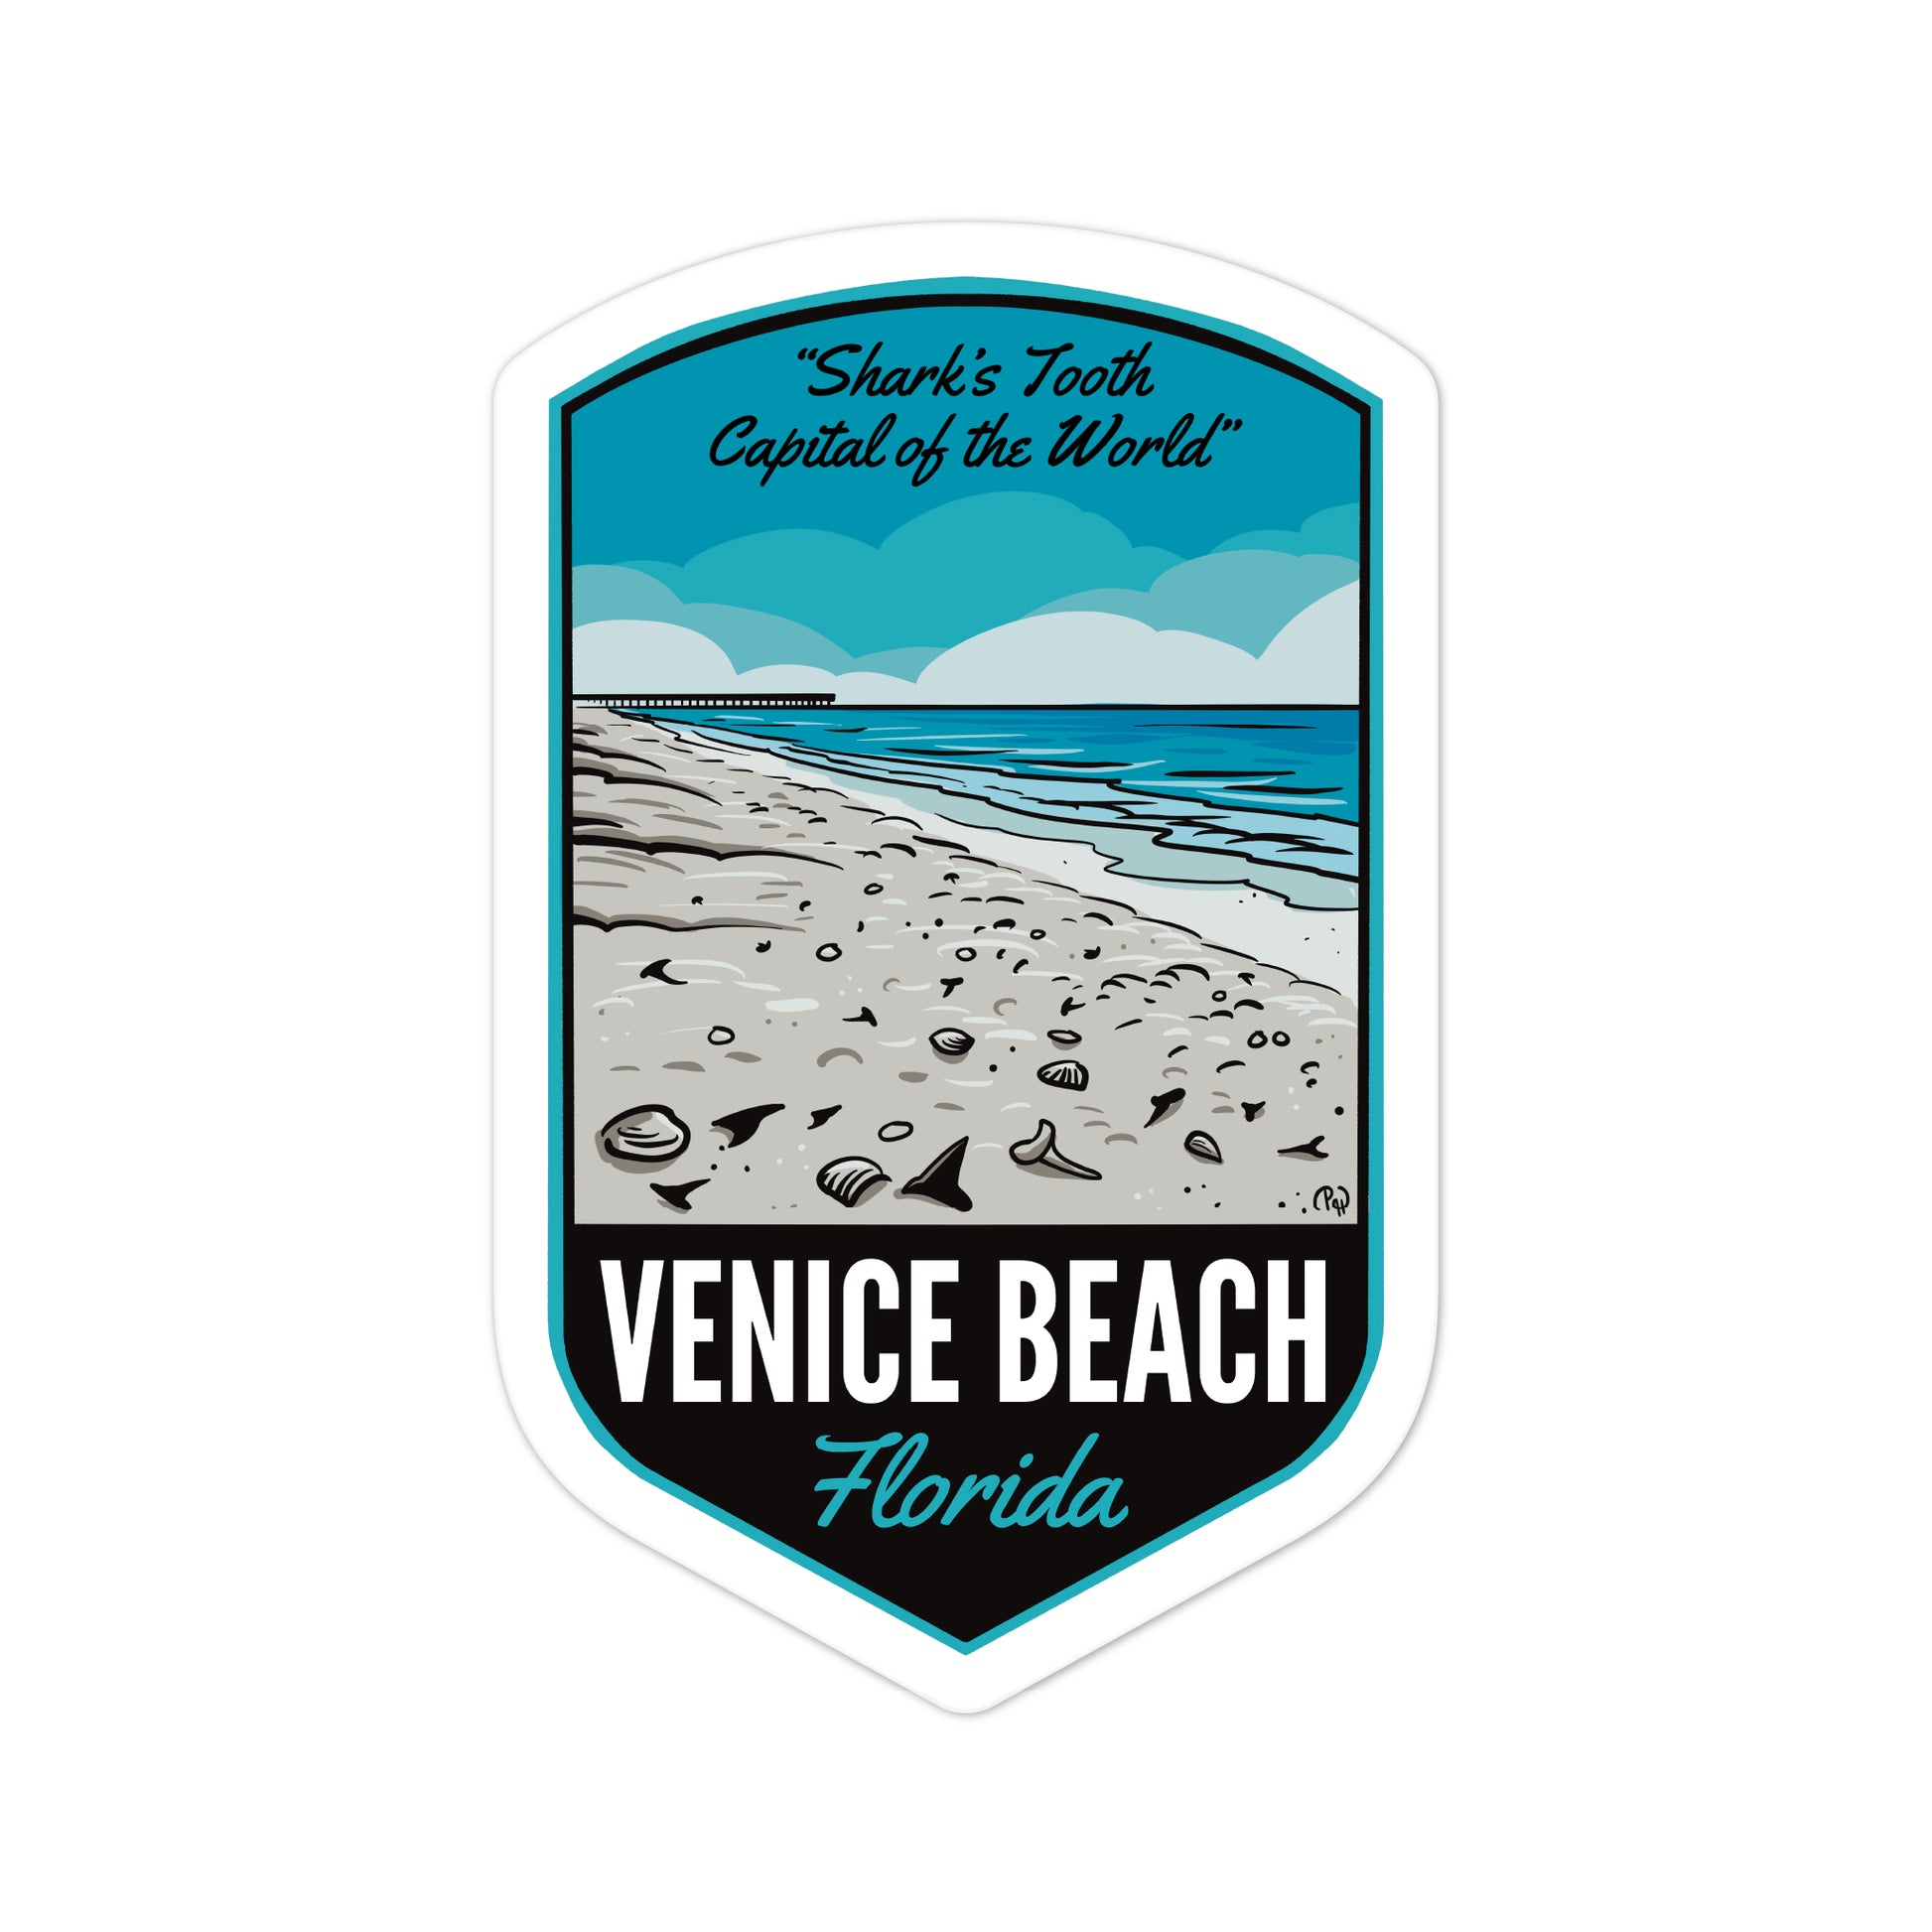 A sticker of Venice Beach Florida